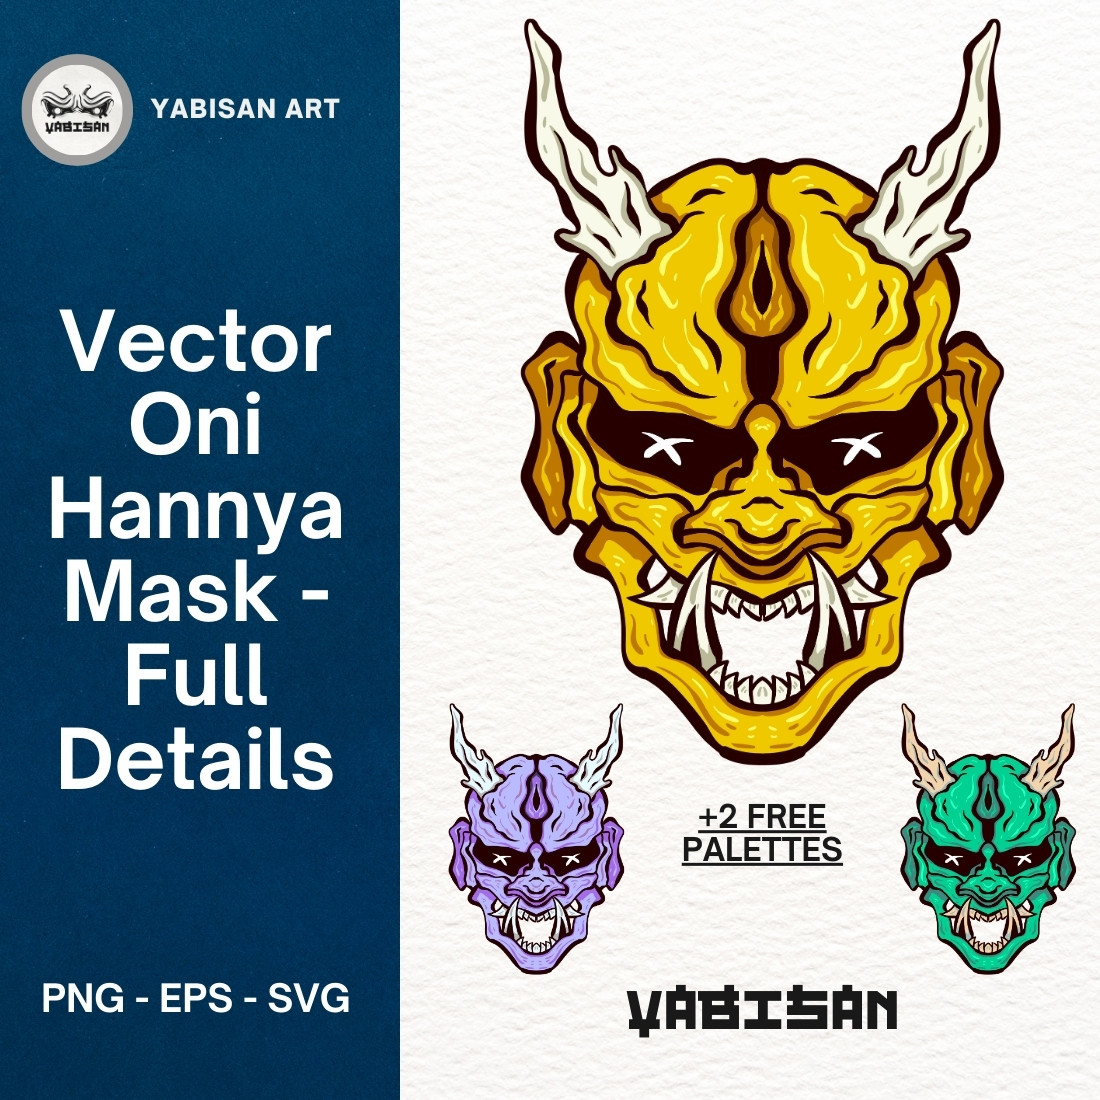 Oni Hannya Mask art 3 - Full Details preview image.